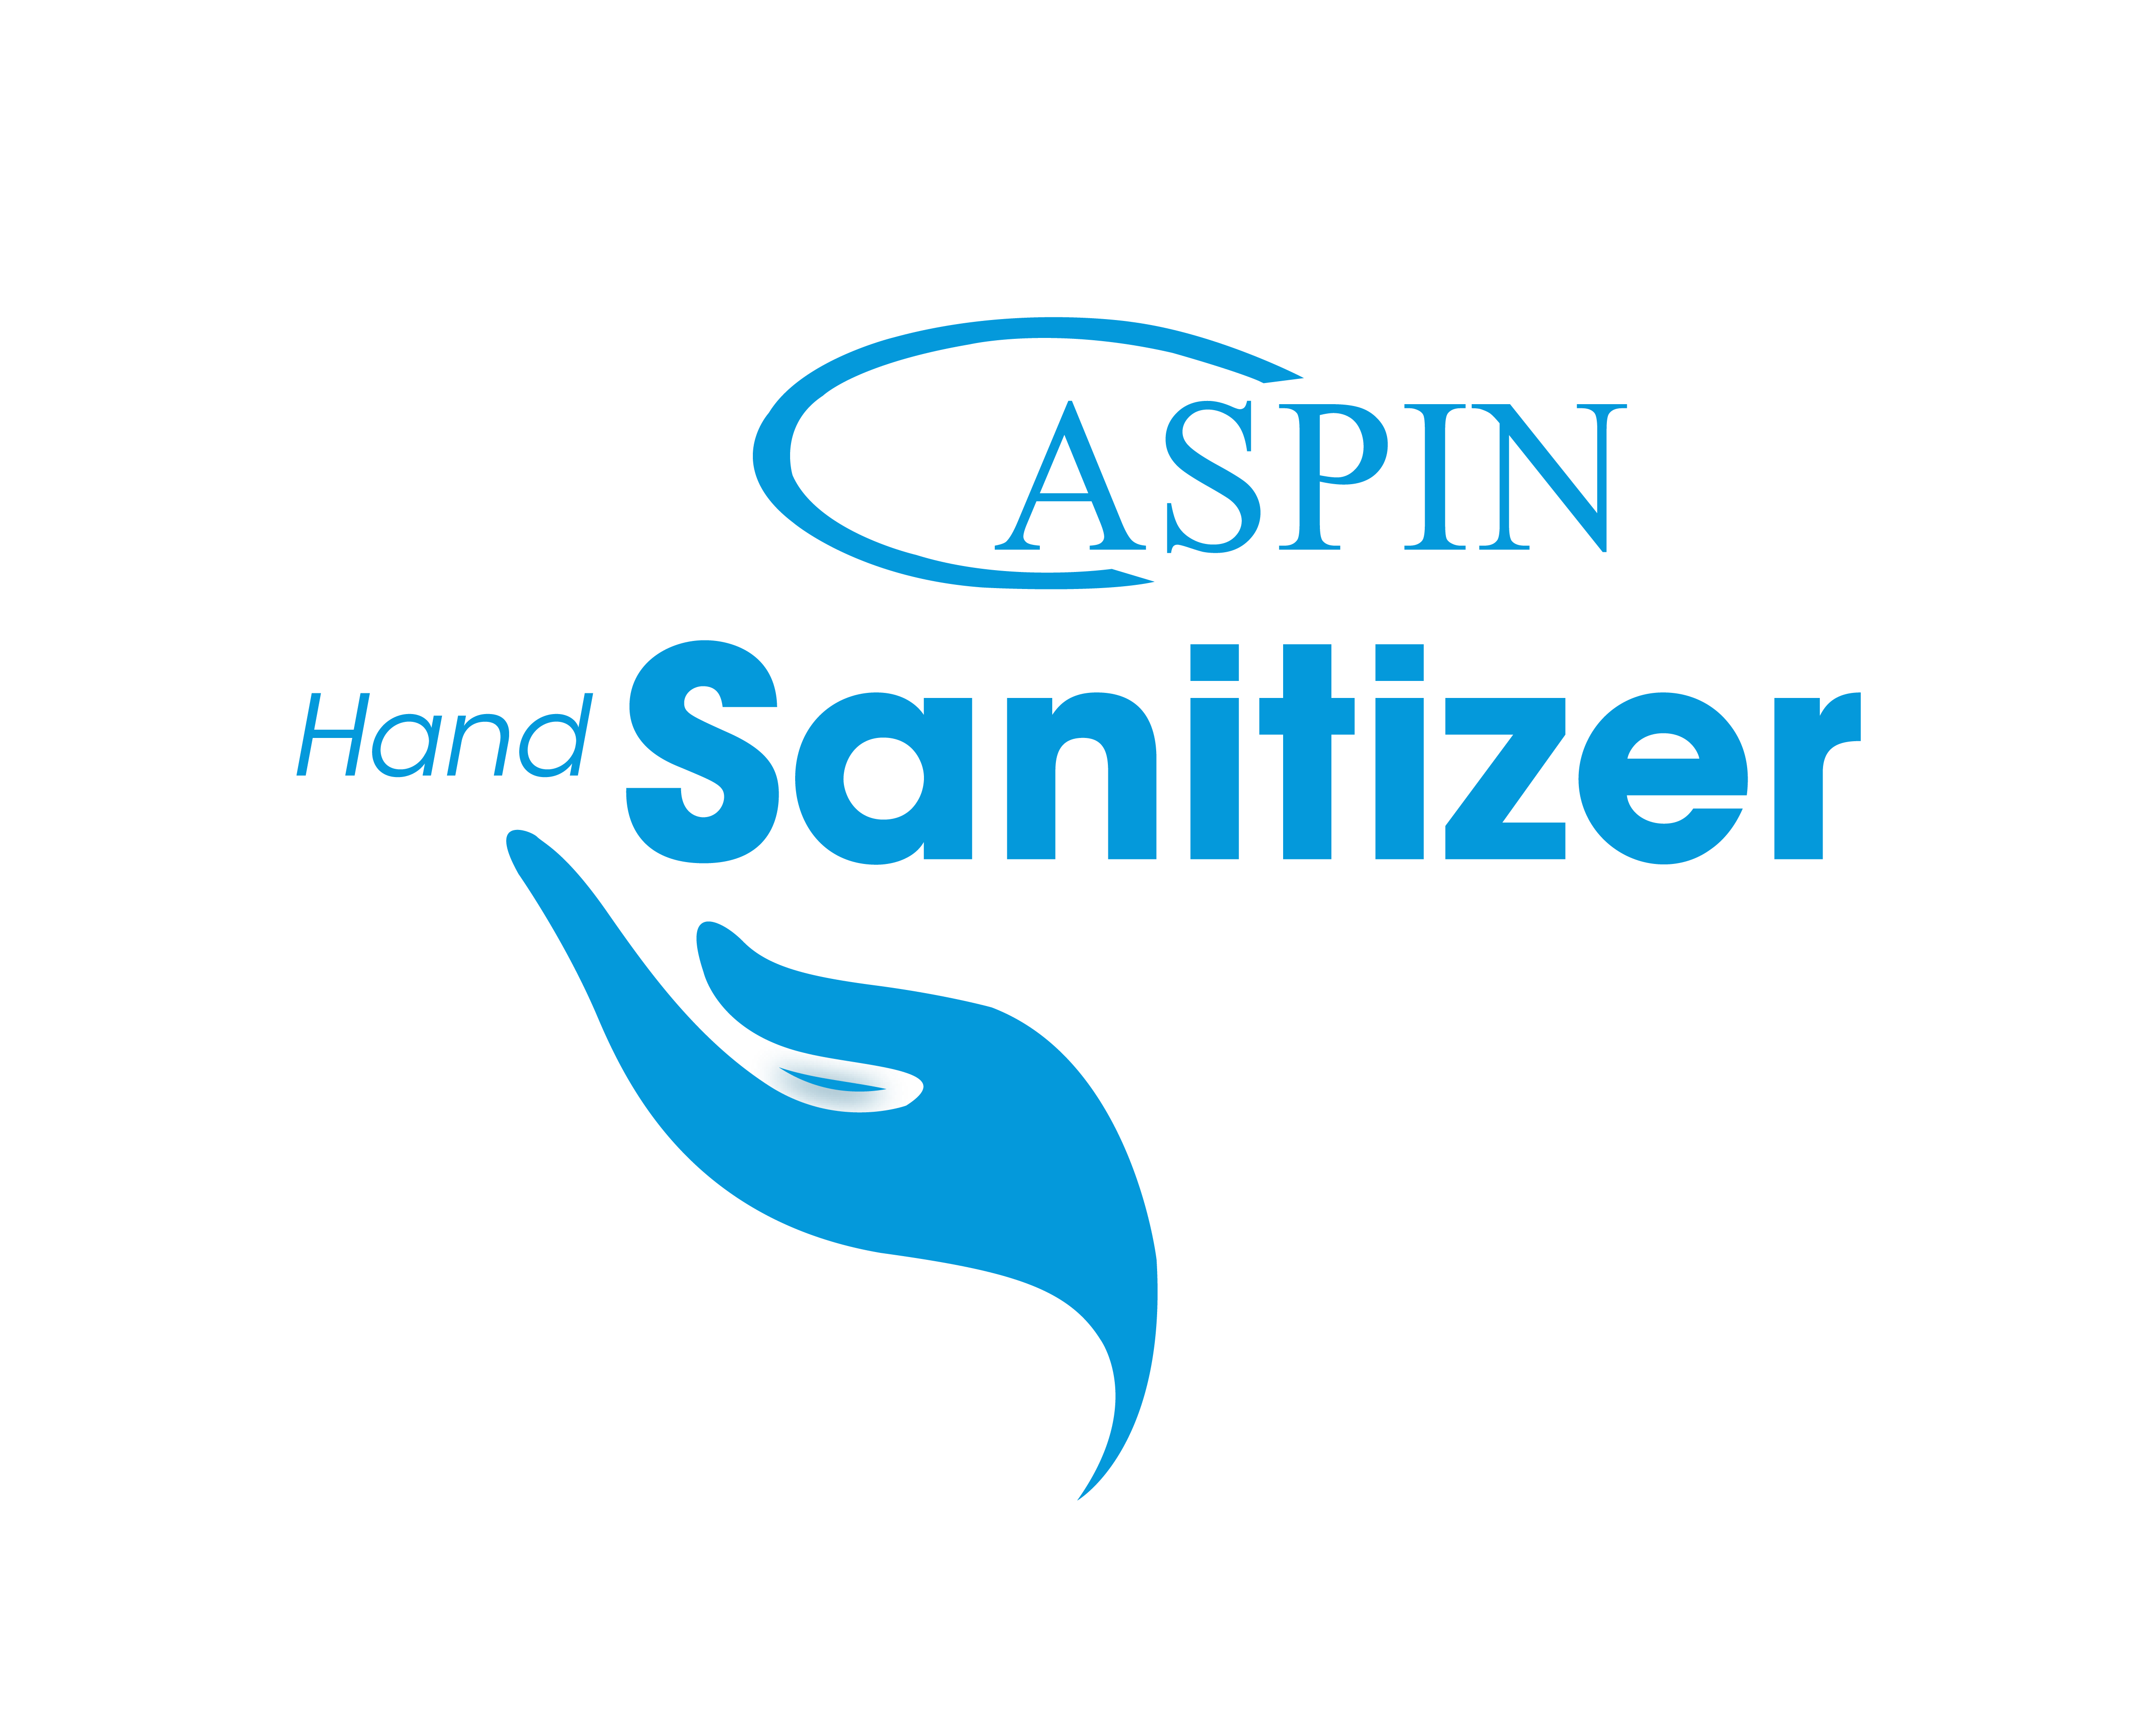 Aspin Hand Sanitizer